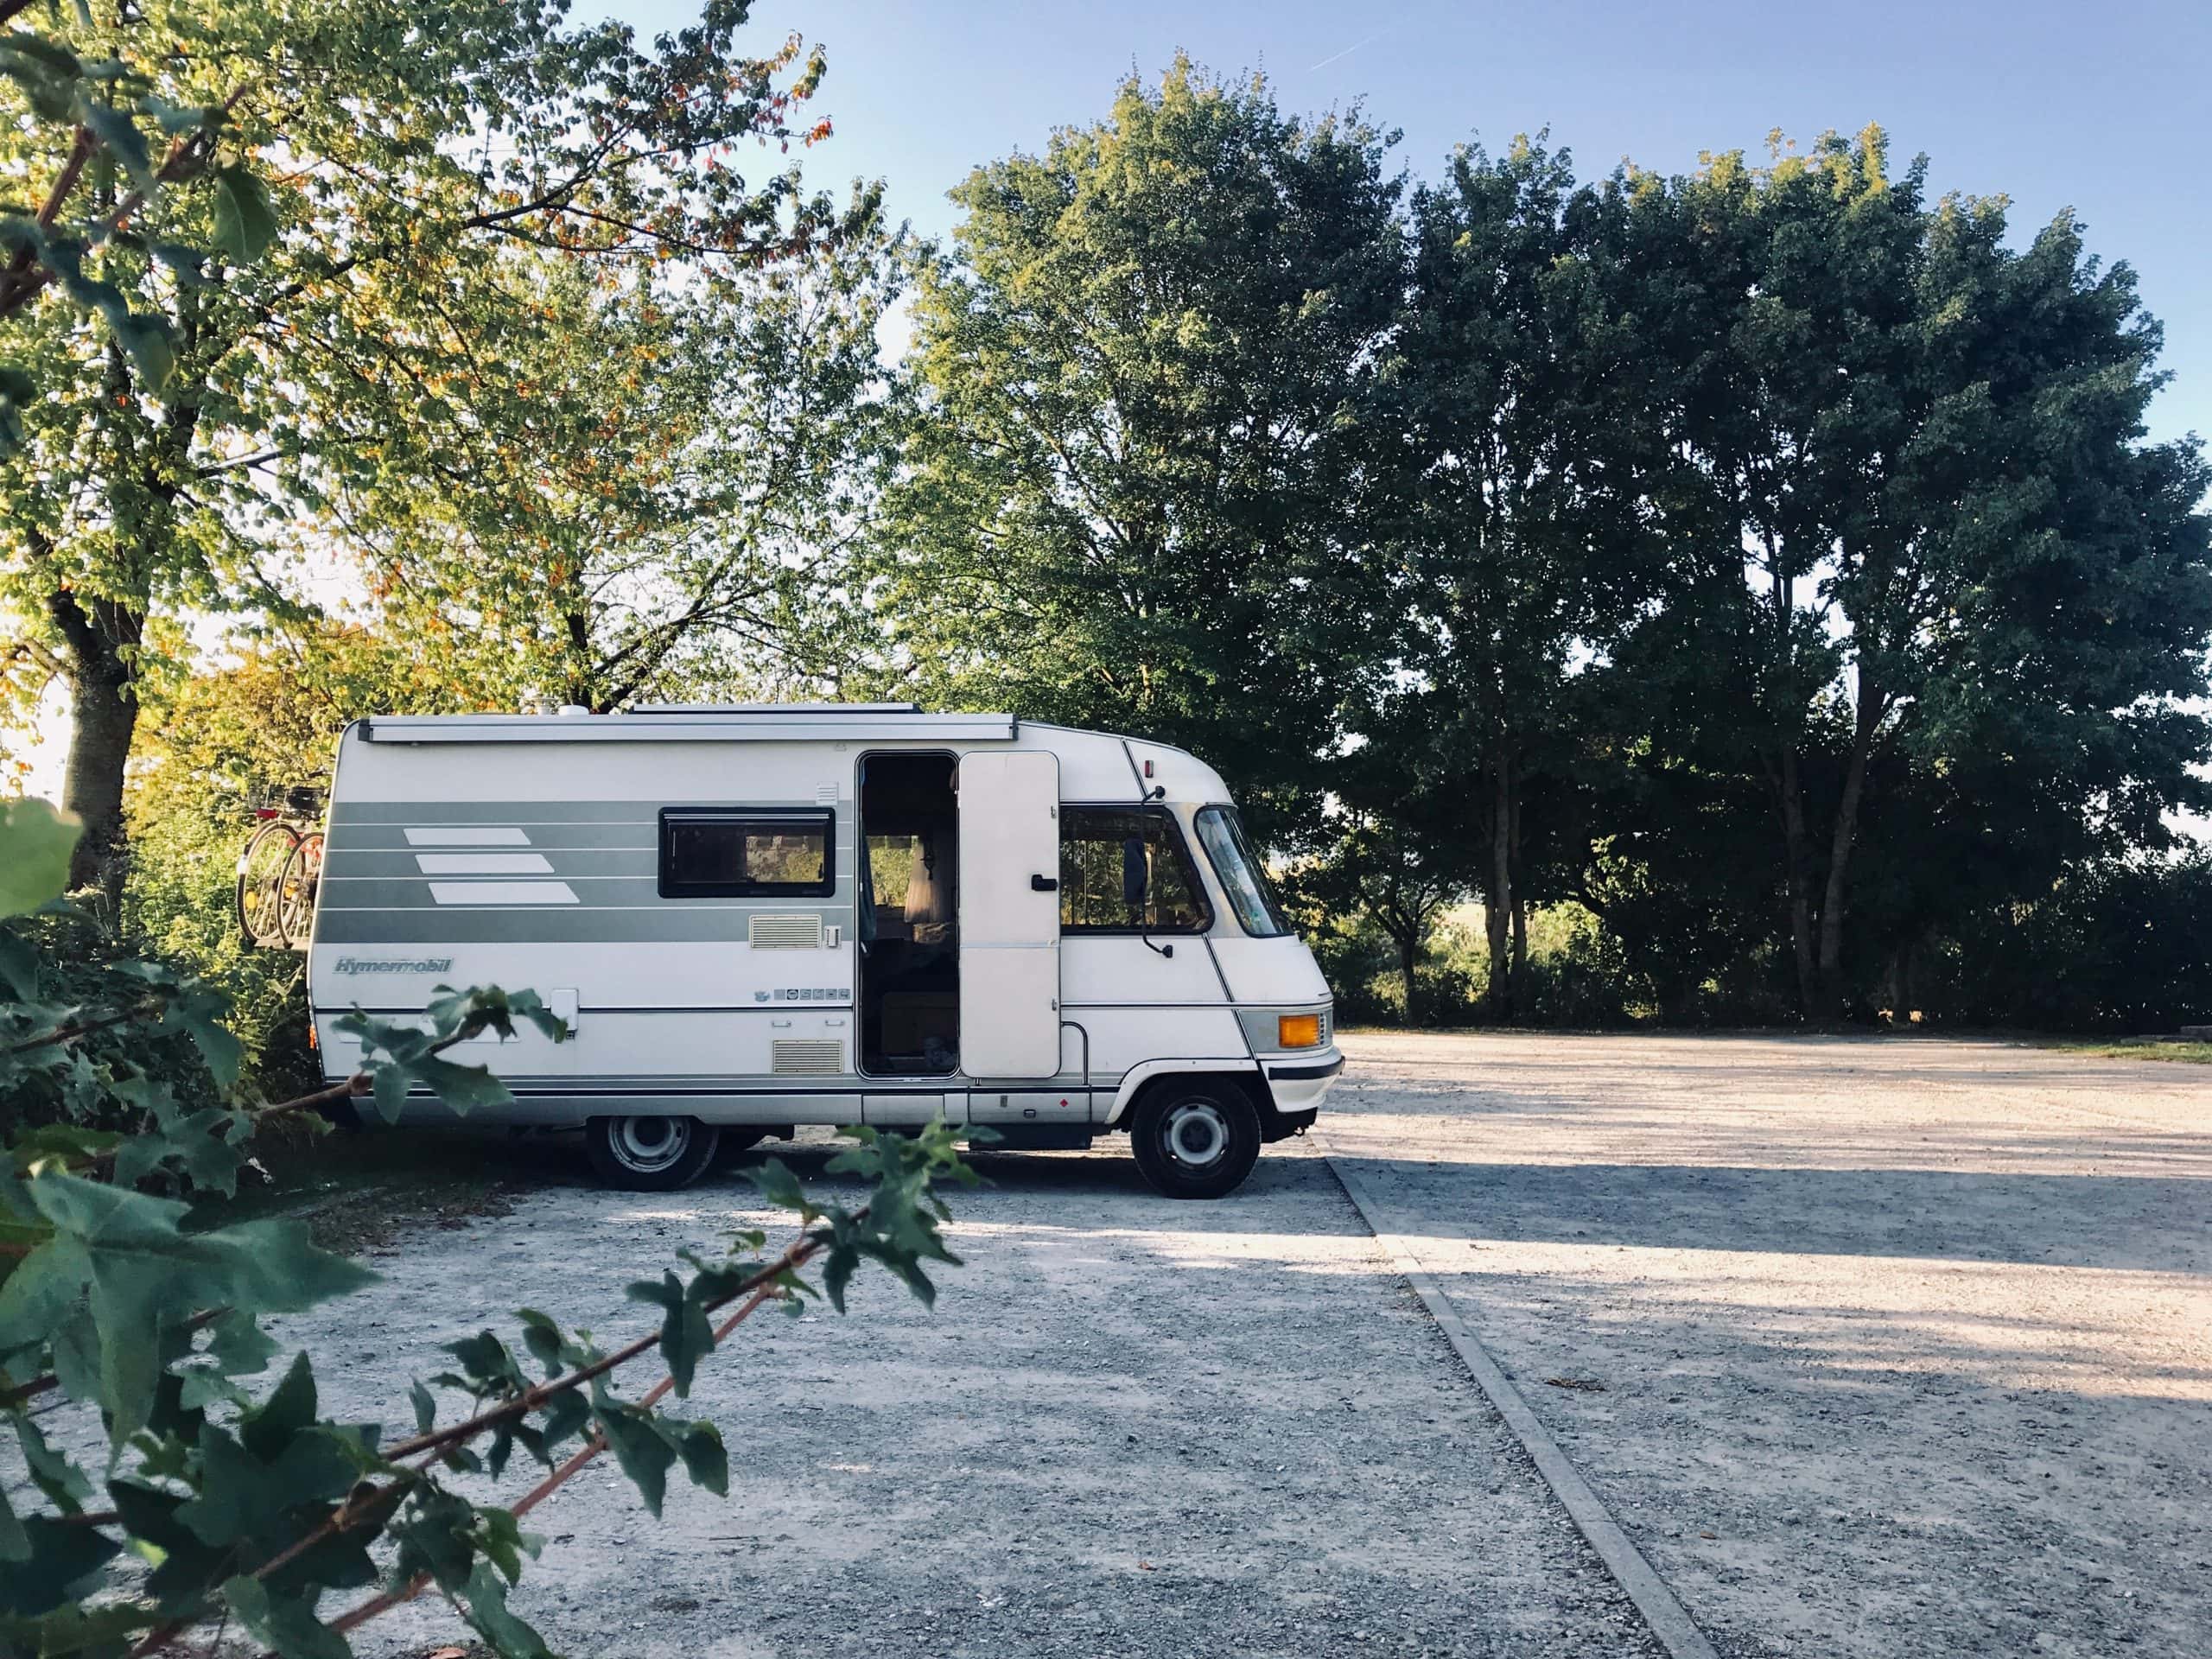 Camping Caravan on a Parking Lot in Hesse, Germany